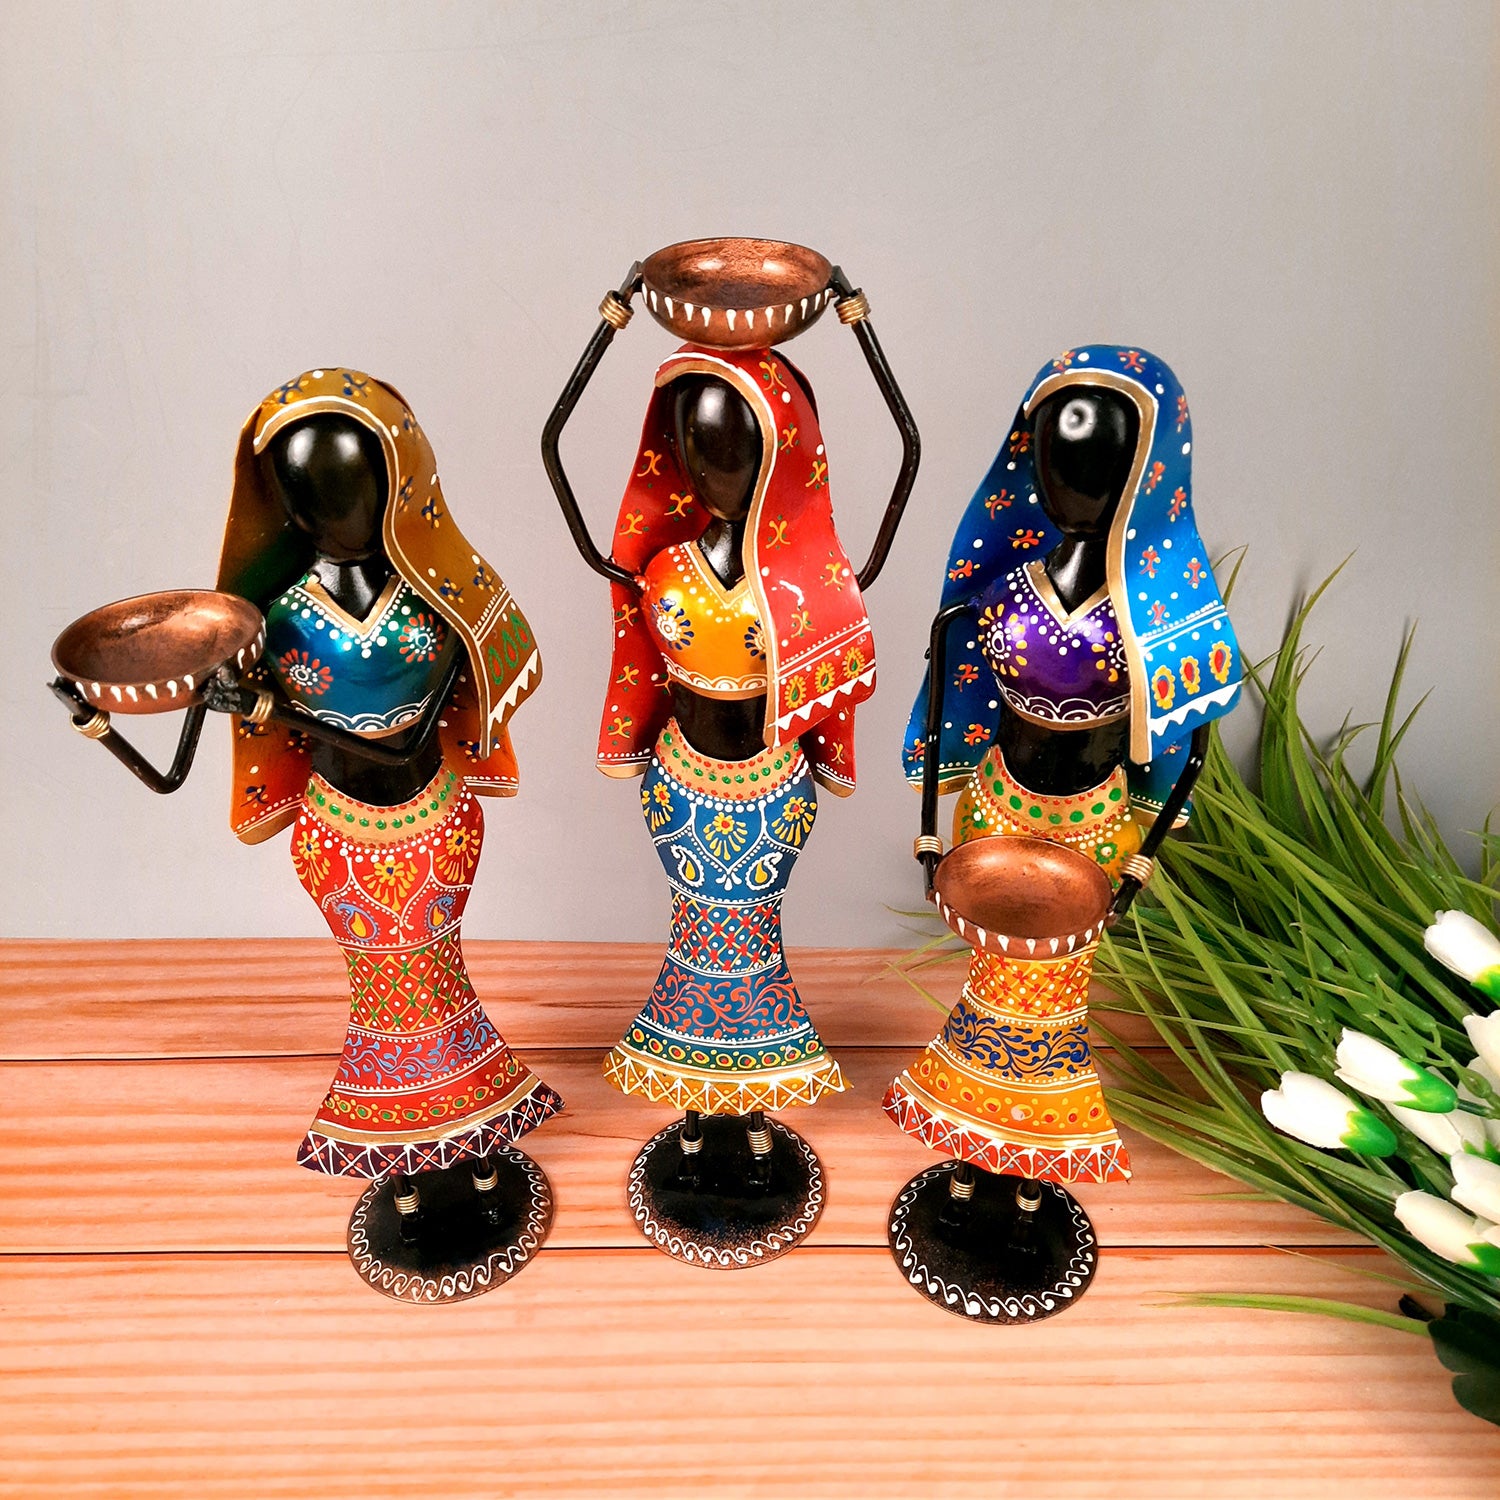 Lady Worker Set - Female Figurines - For Side Table Decoration - 14 Inch - Set of 3 - ApkaMart